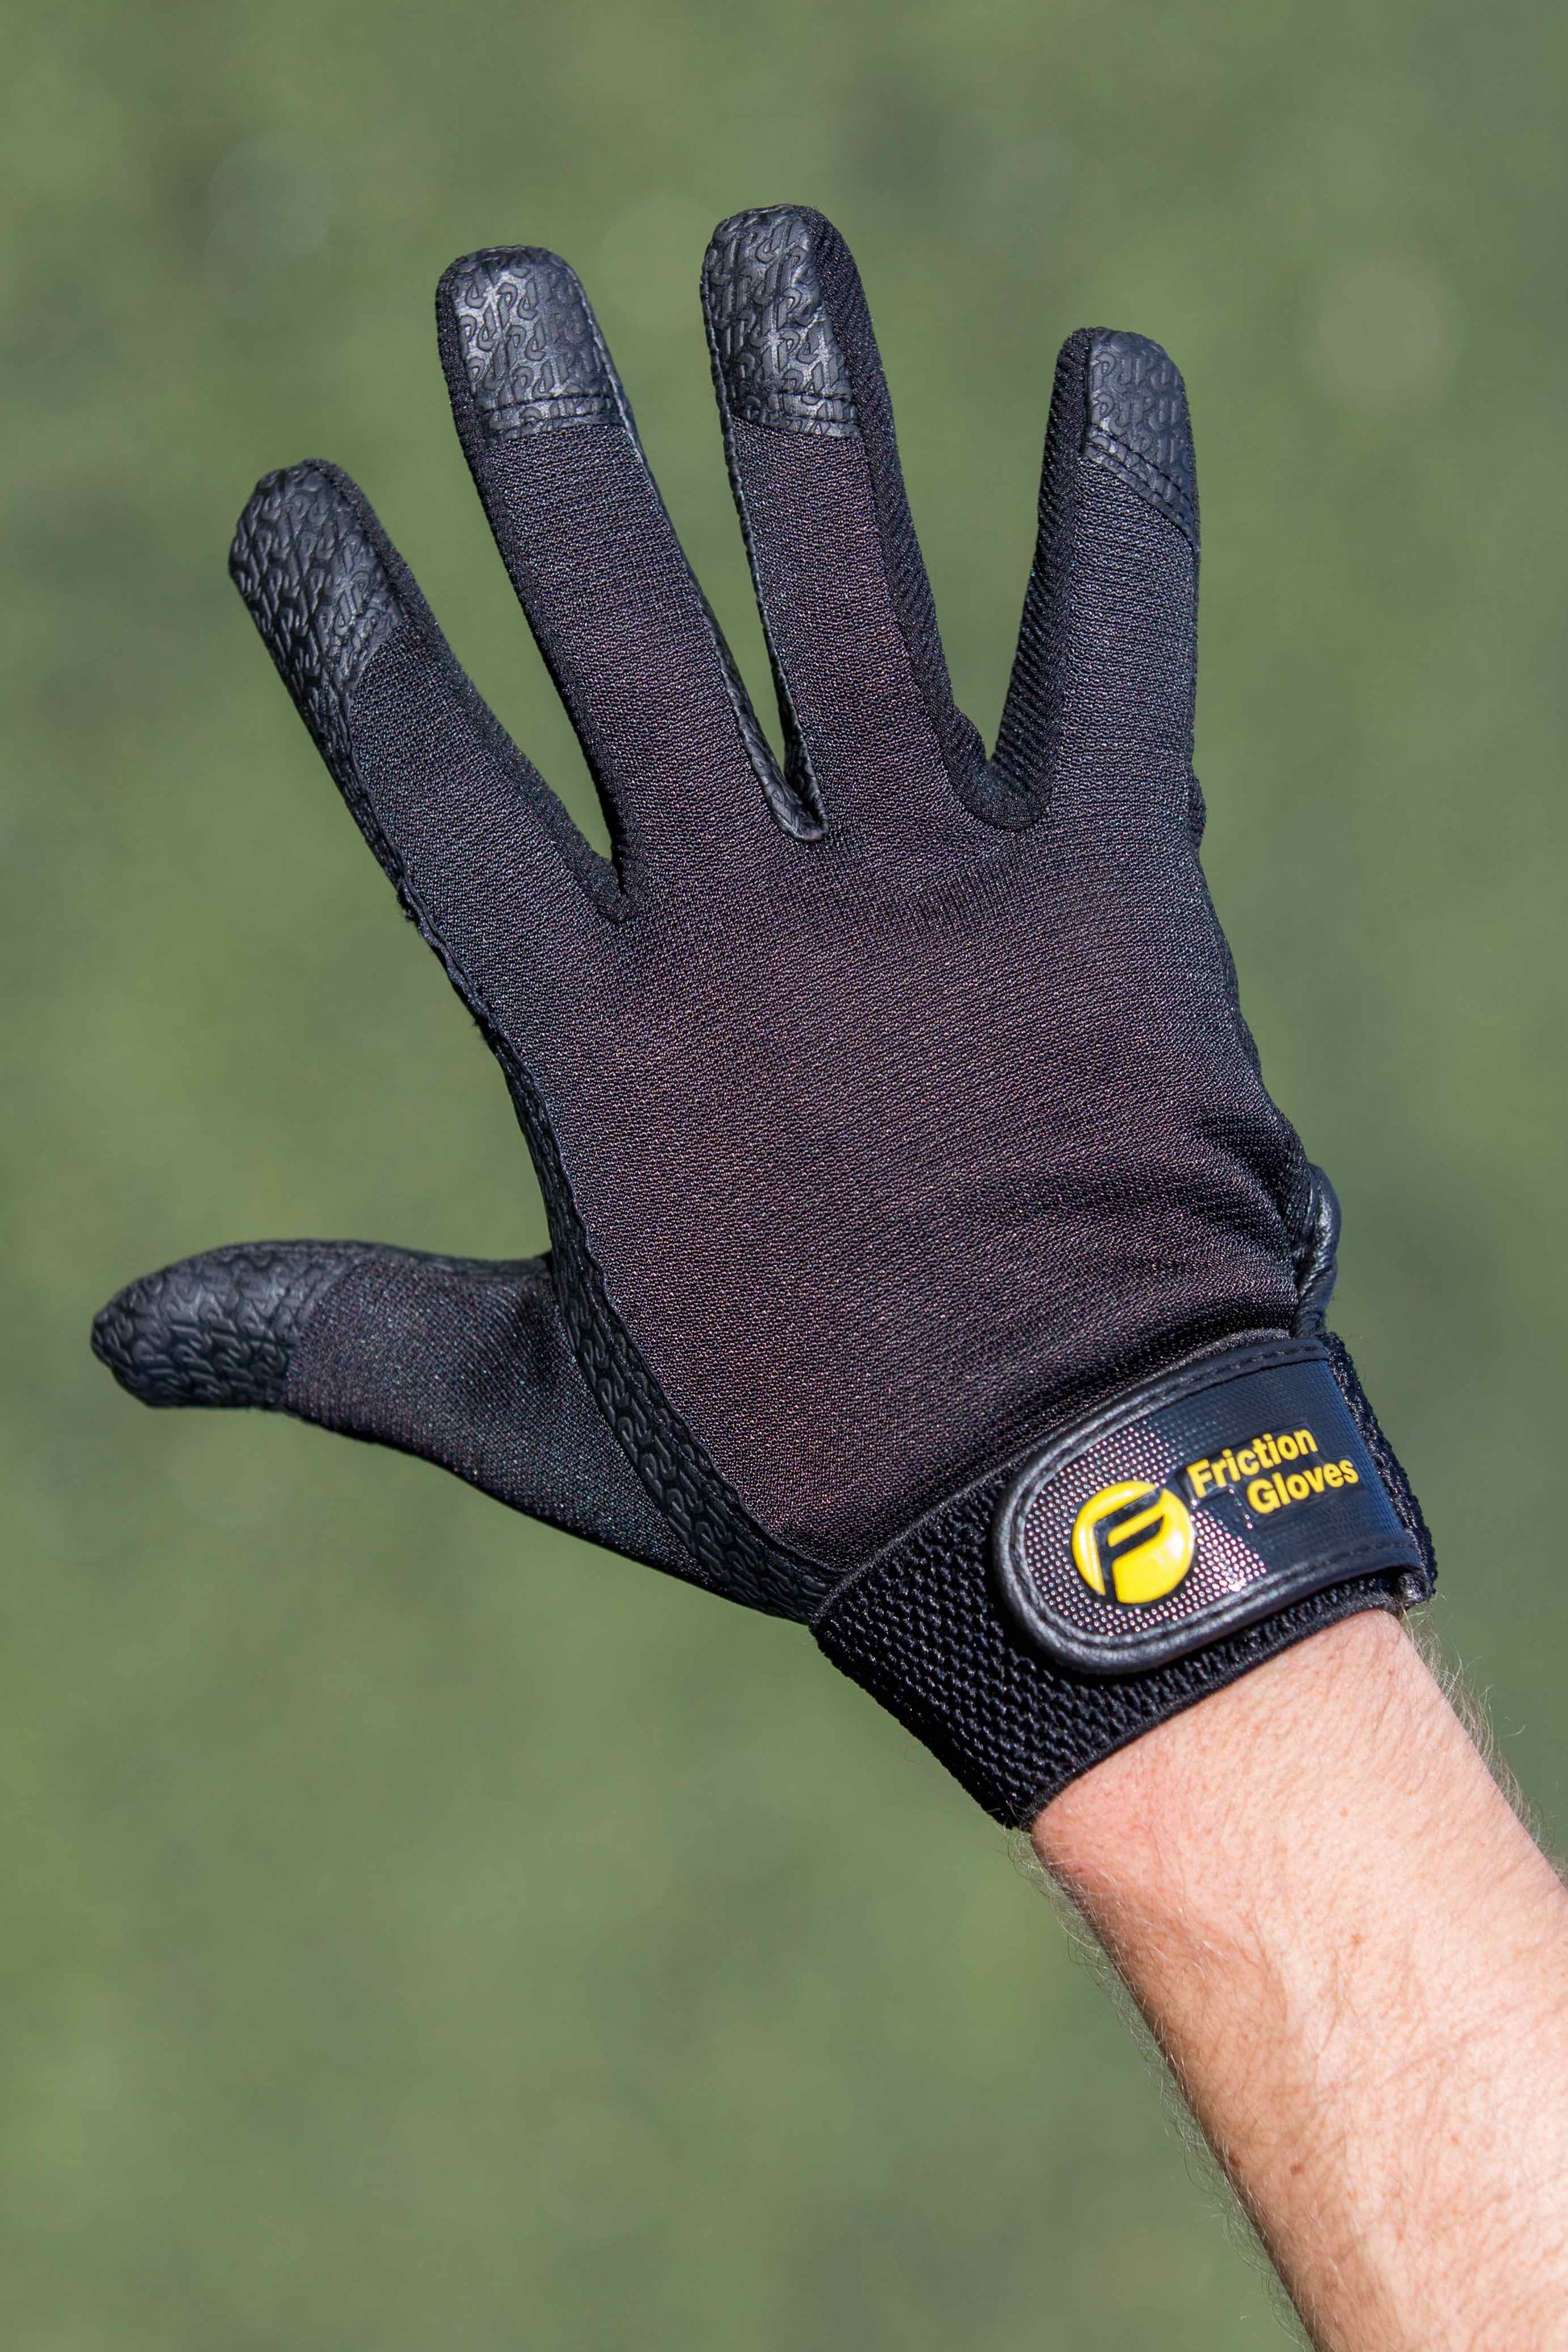 Gloves Disc Bag Essential Sabattus Disc Golf, Inc.